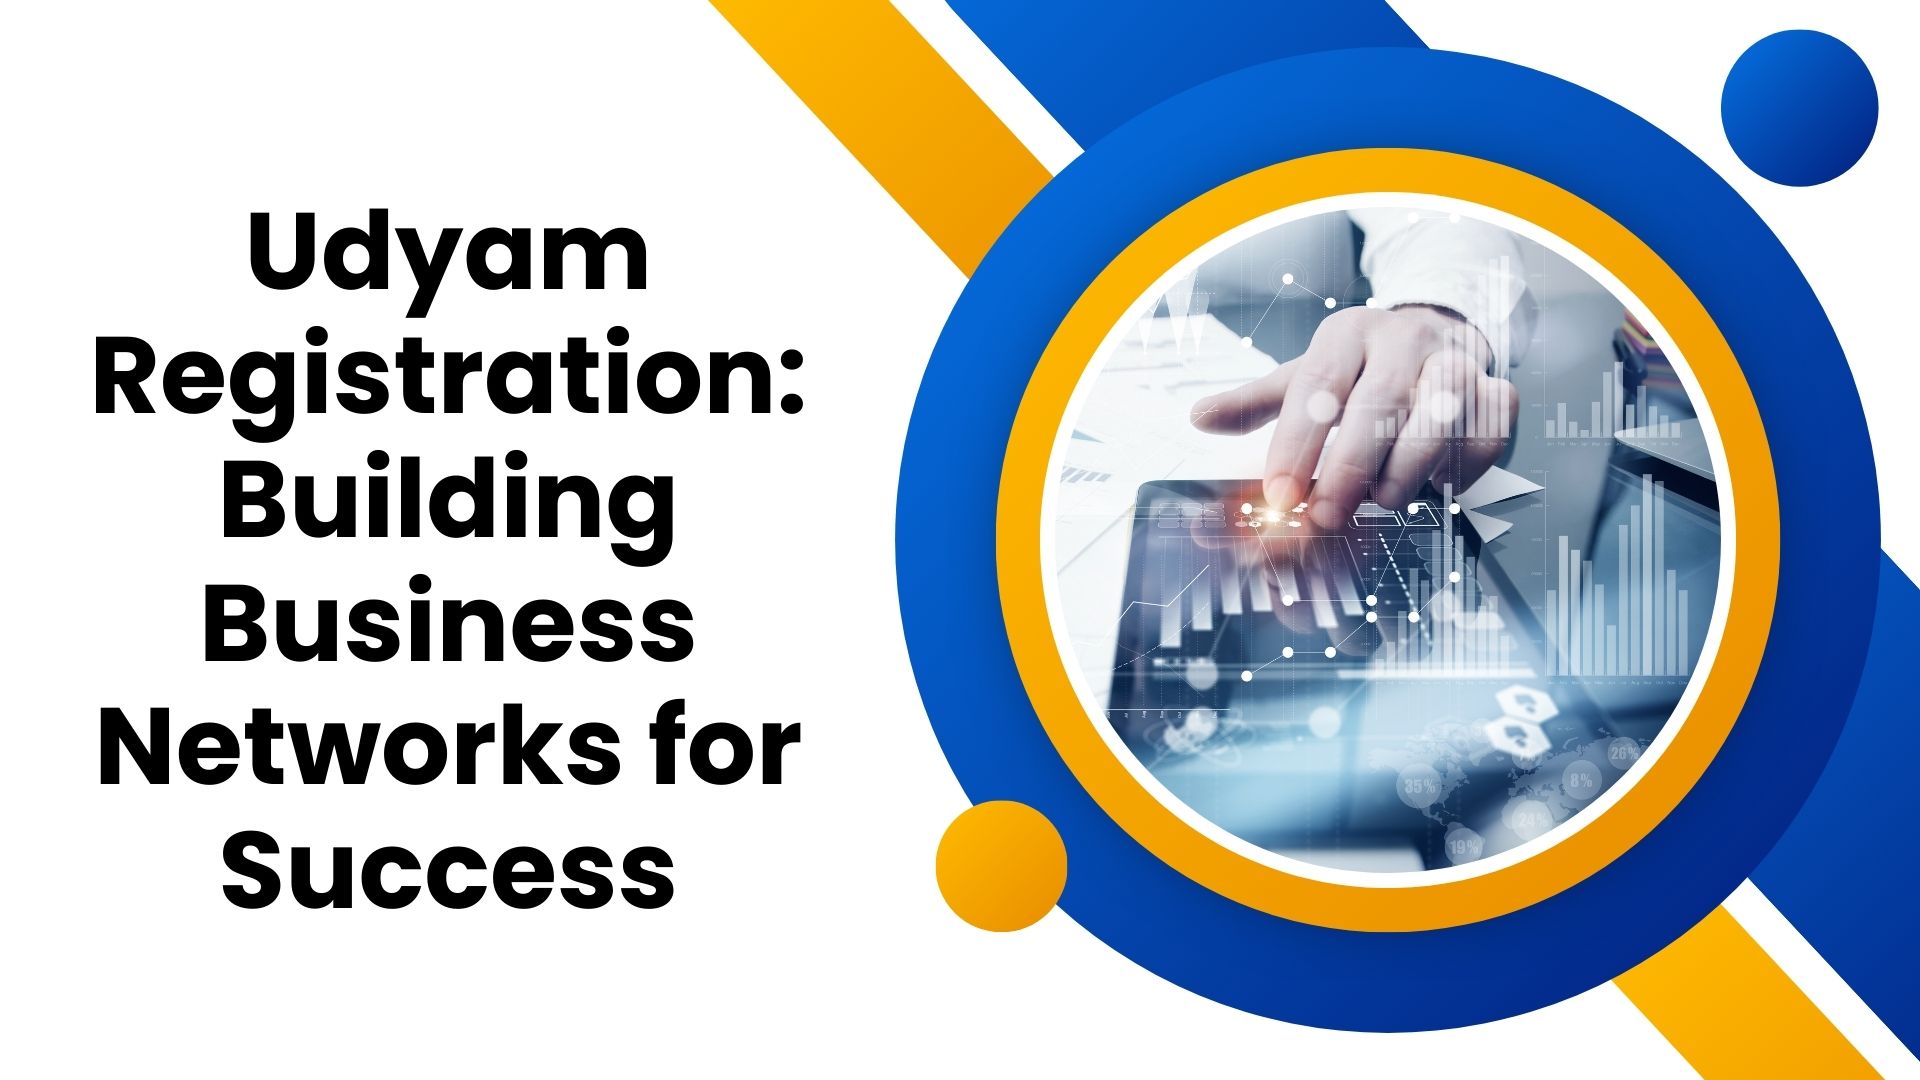 Udyam Registration: Building Business Networks for Success